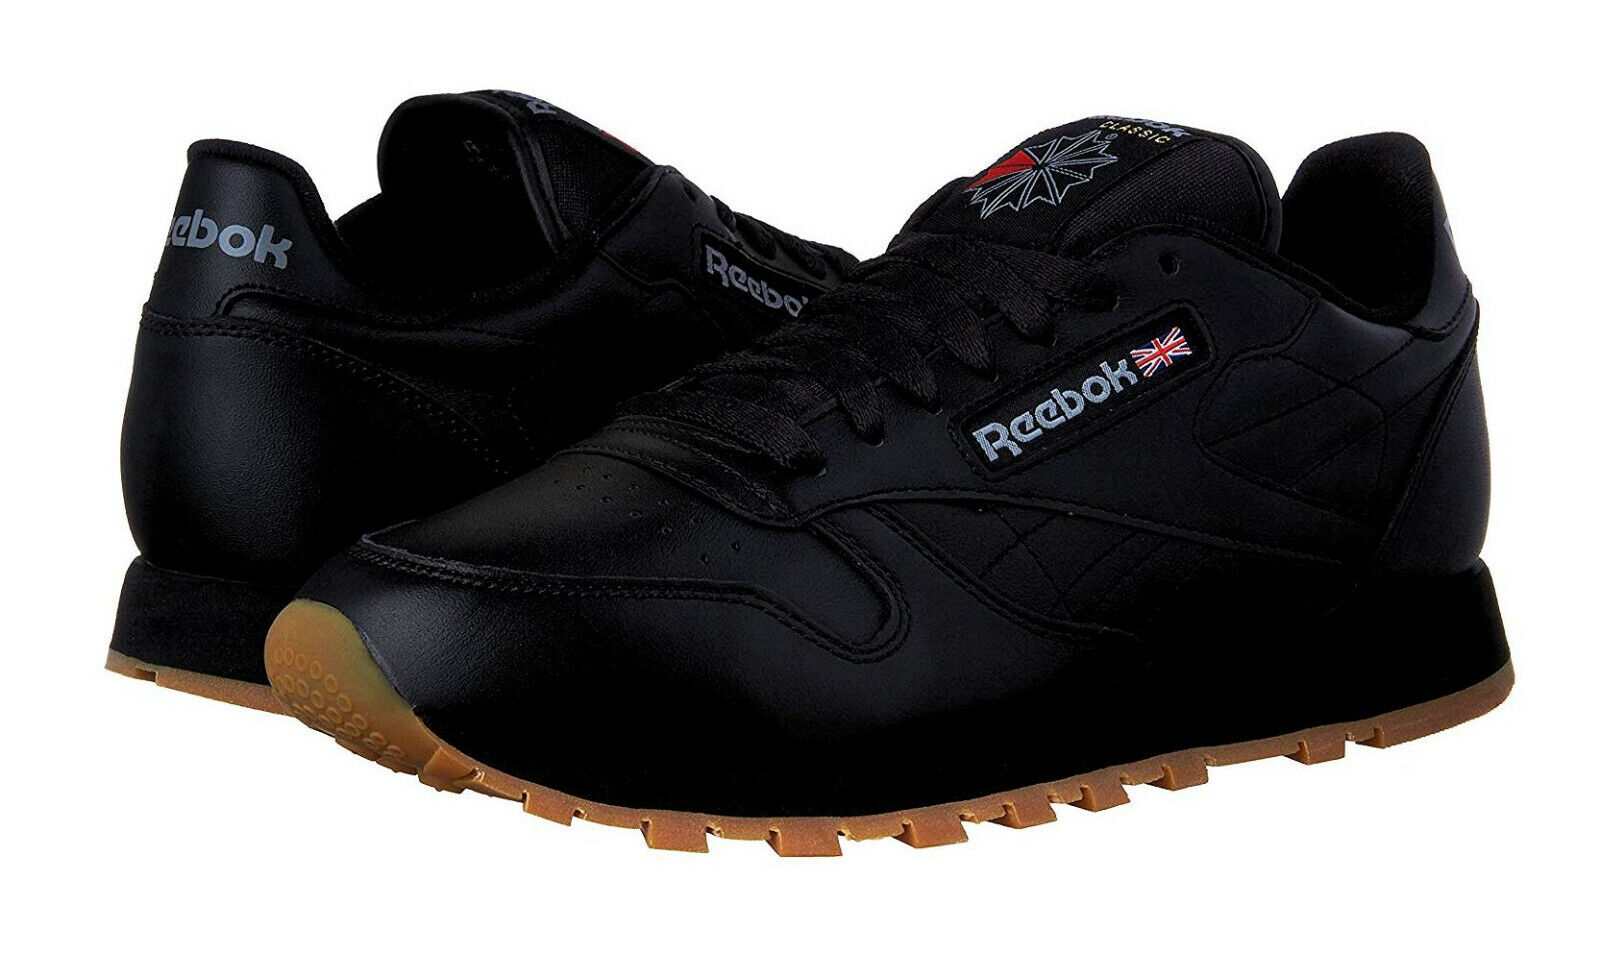 ir a buscar Día Verde Reebok Classic Leather Black Gum Mens Running Trainers Tennis Shoes 49798 –  ASA College: Florida